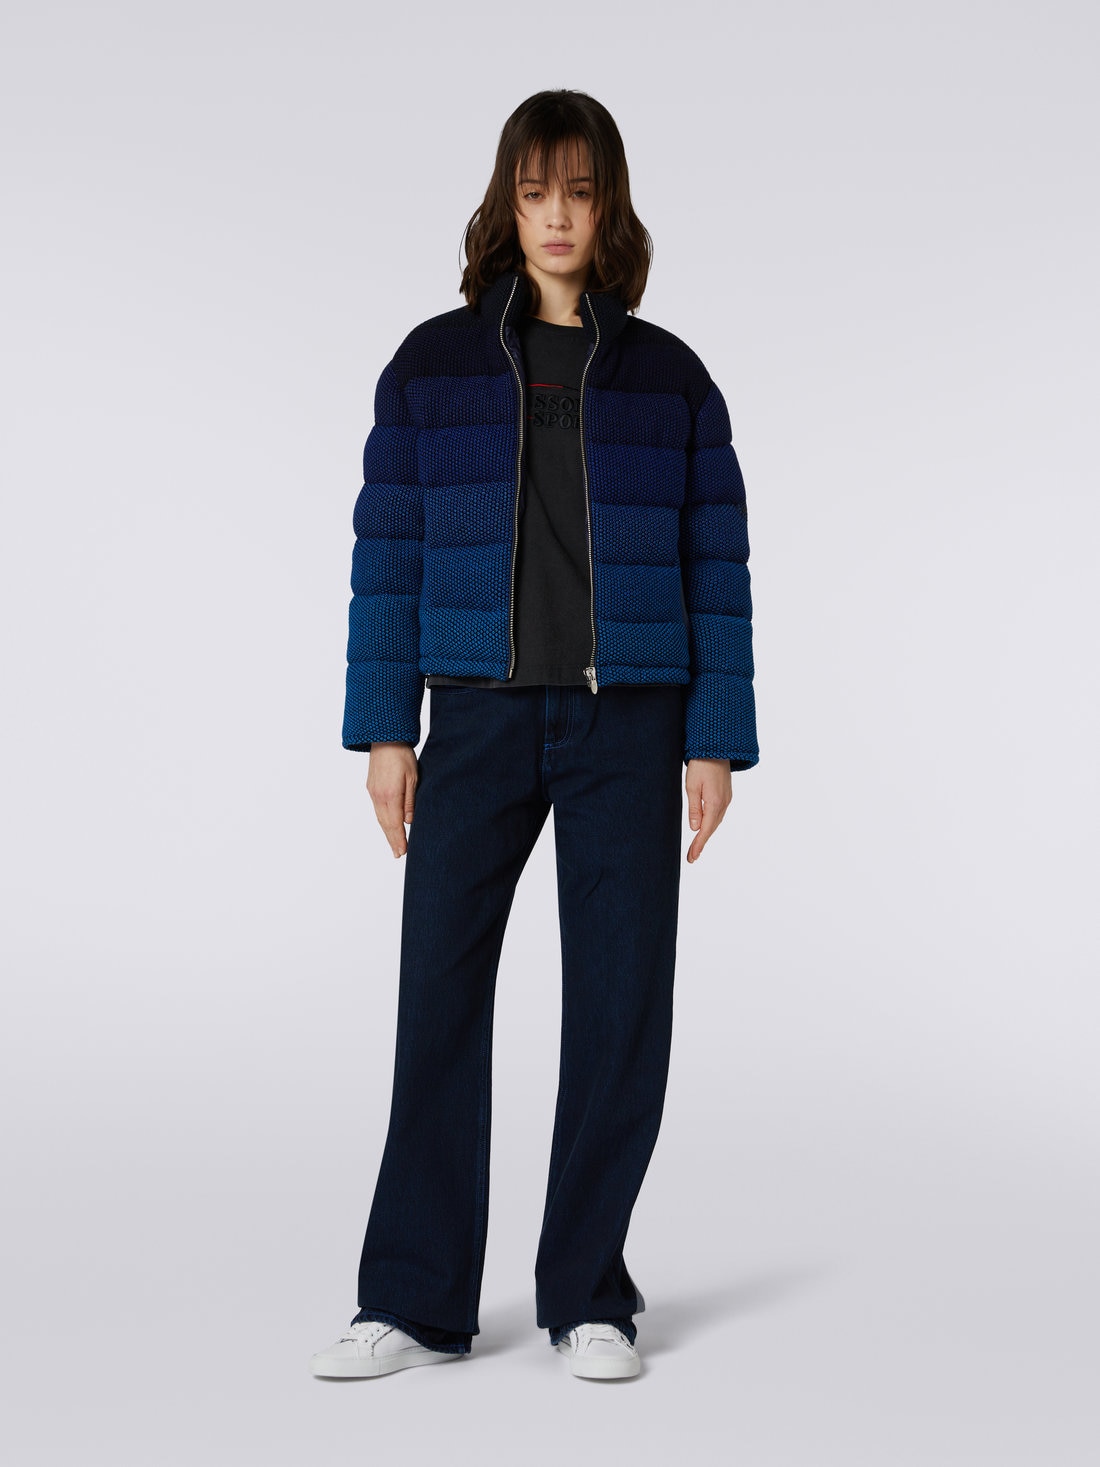 Cropped jacket in dégradé padded cotton blend, Black & Blue - SS23WC02BK027RS72BS - 1